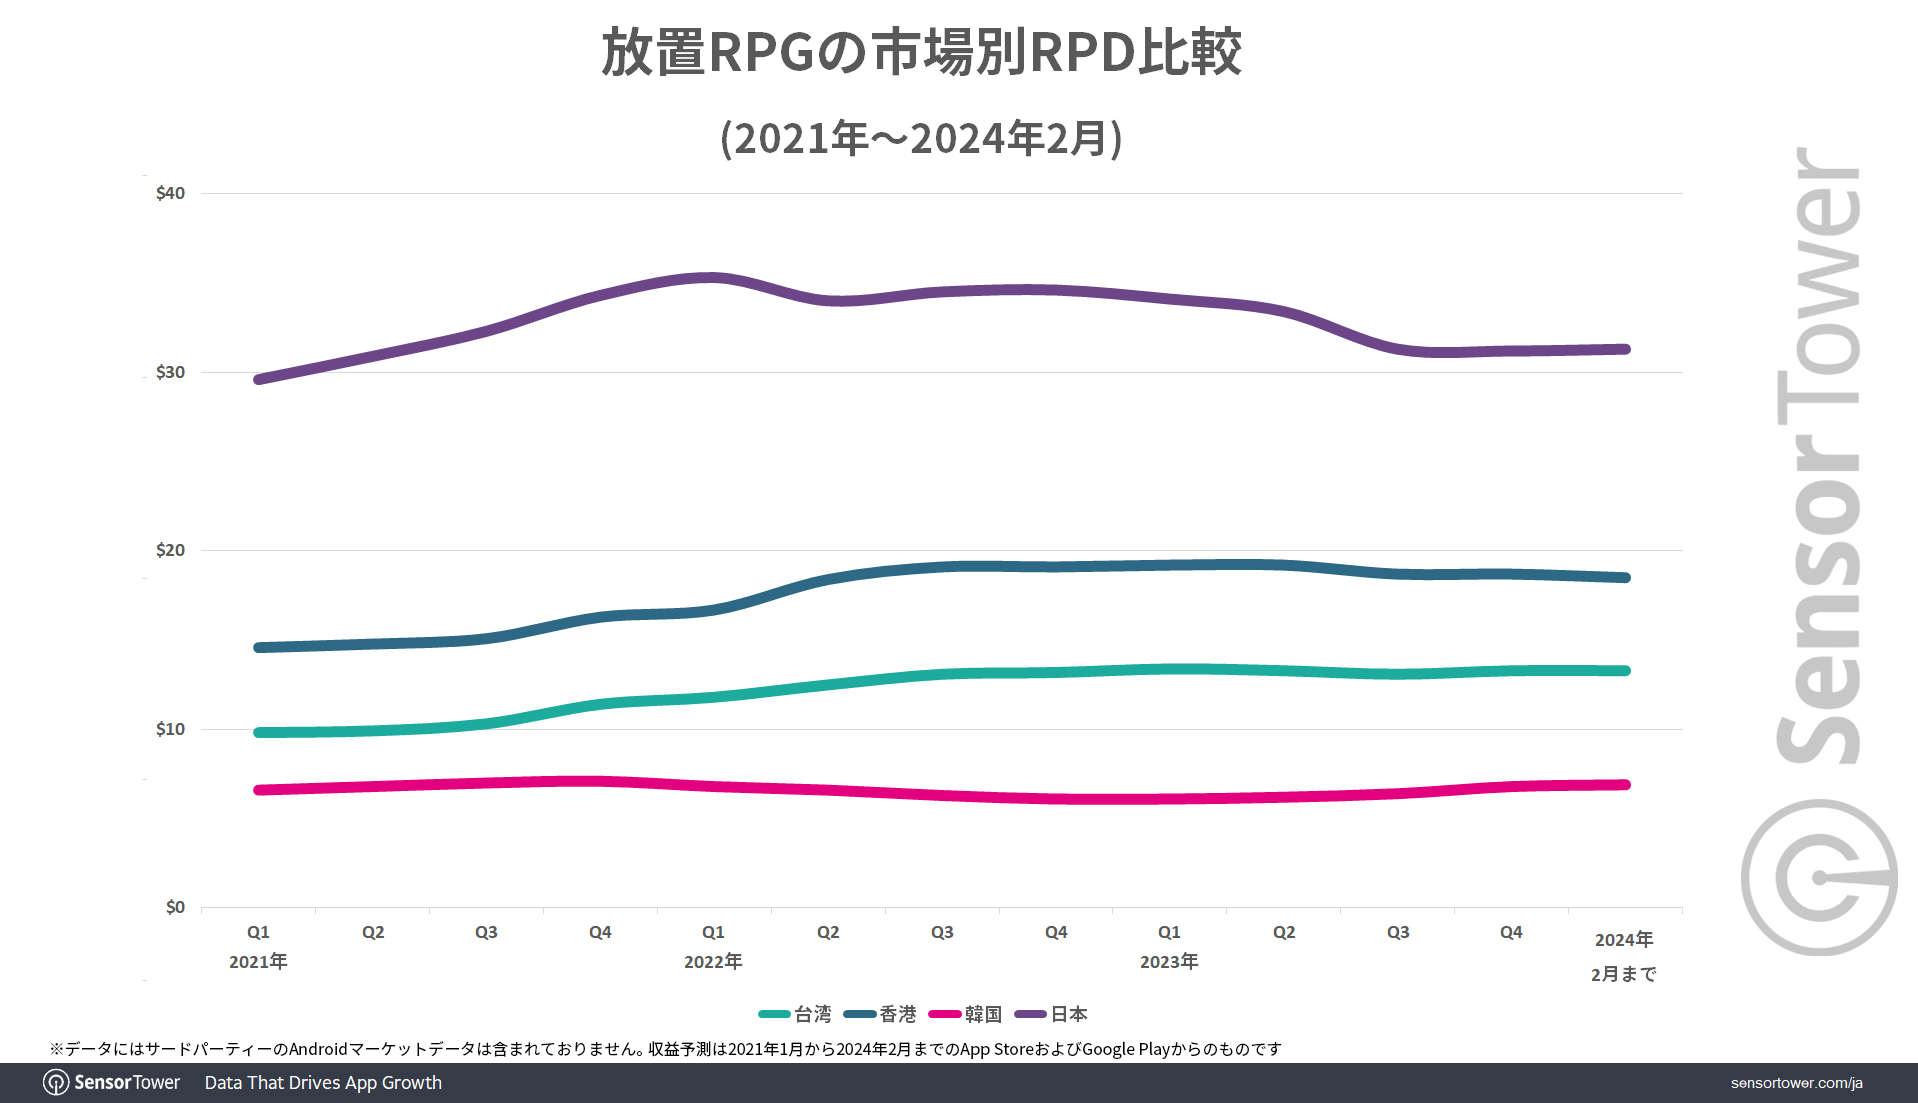 IdlerpgRPD-comparison-by-market